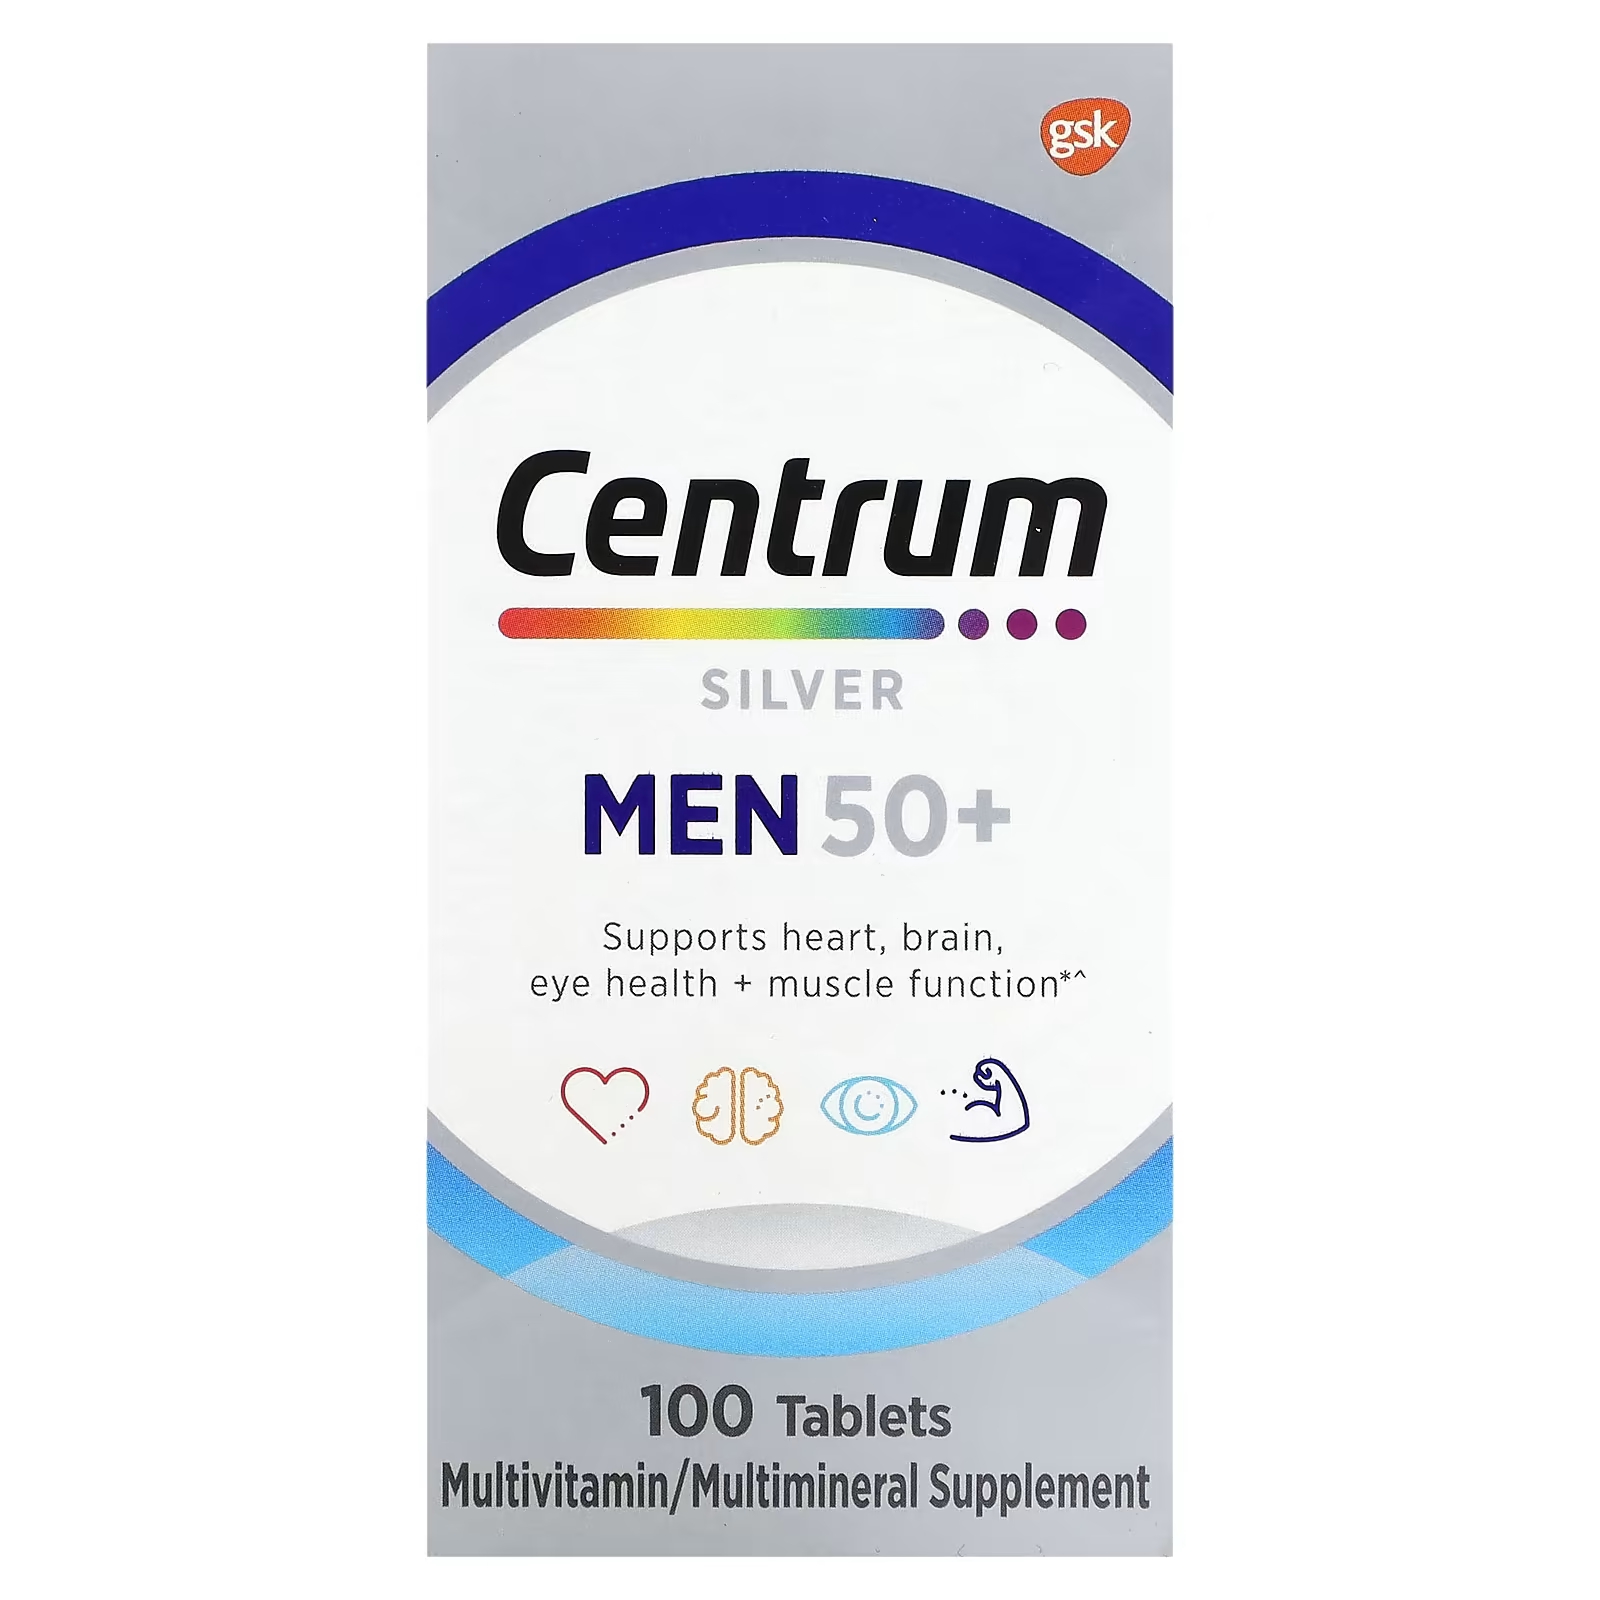 Мультивитаминная добавка Centrum Silver для мужчин 50+, 100 таблеток мультивитаминная добавка centrum silver для мужчин 50 100 таблеток